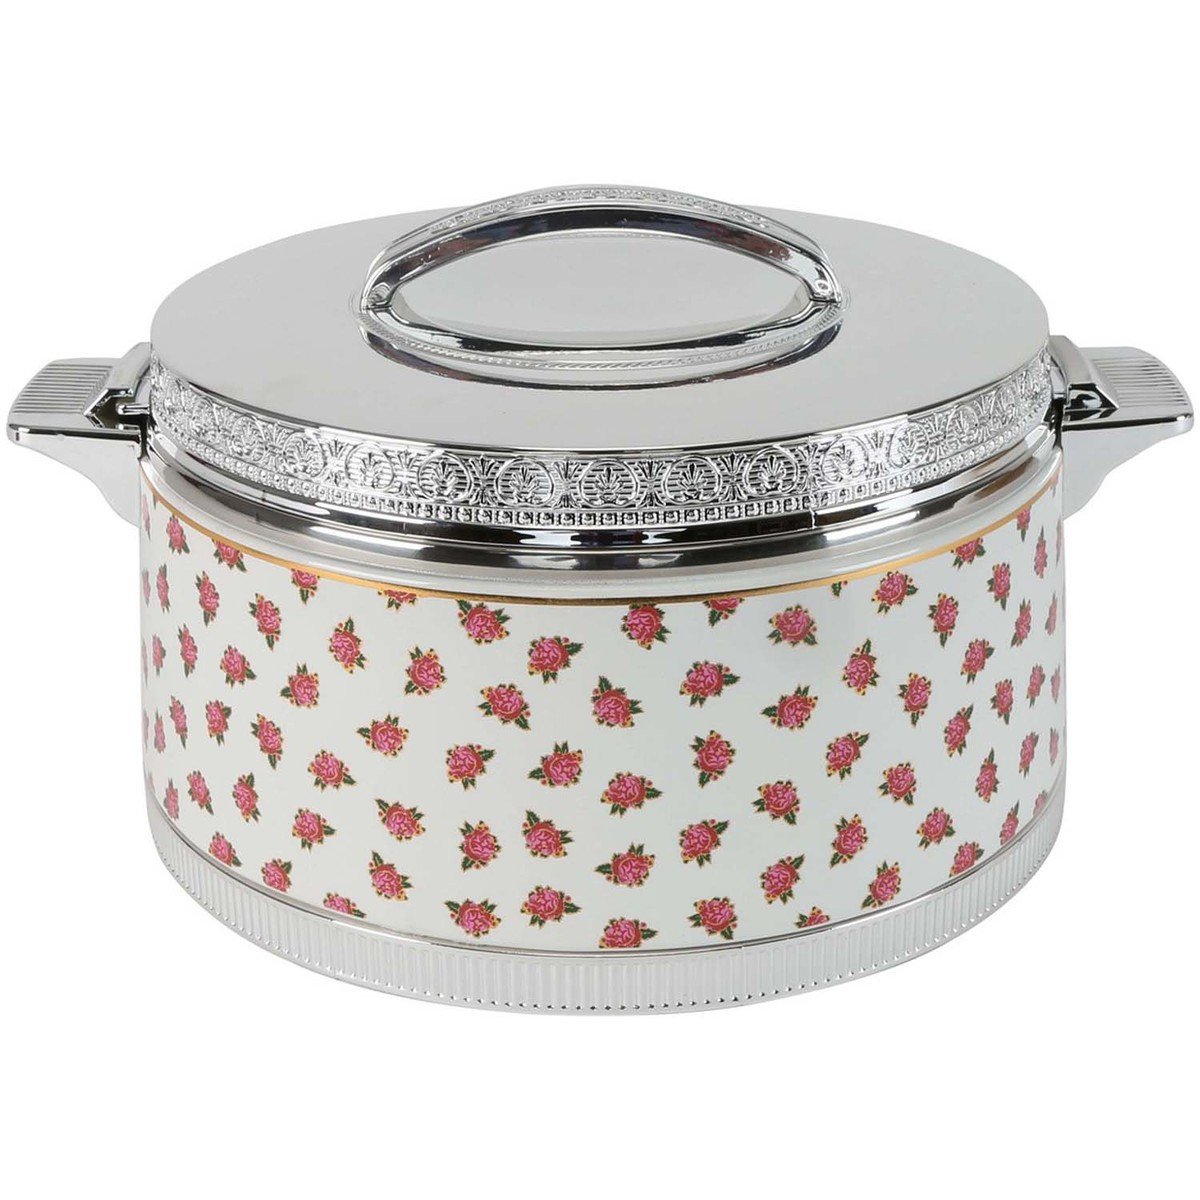 Chefline Hot Pot Silver HPS2-02 5.5Ltr